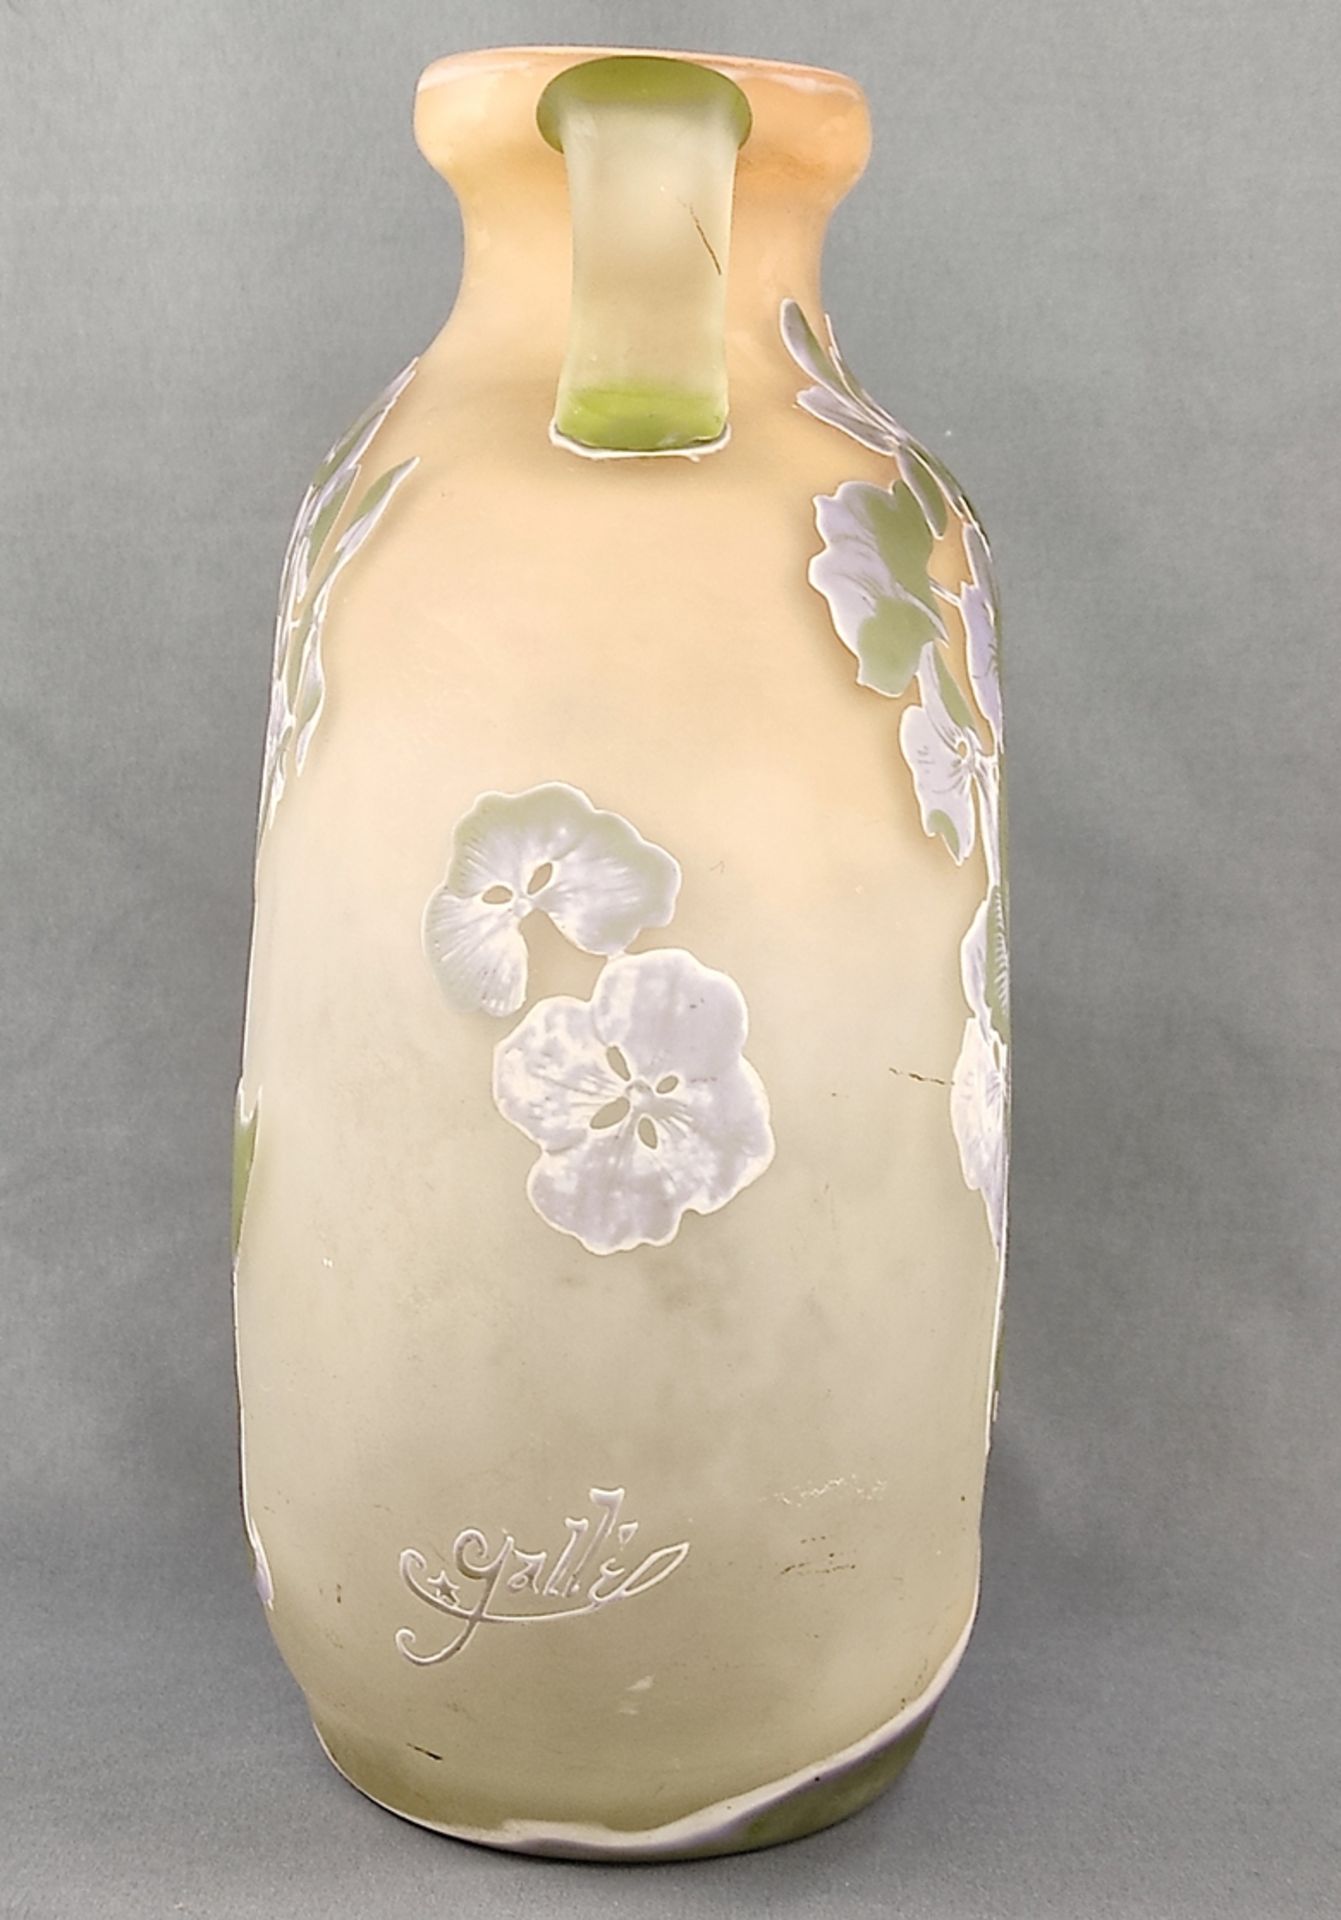 Large art nouveau double handle vase "Groseilles", Emile Gallé, oval form with flattened sides, ind - Image 2 of 6